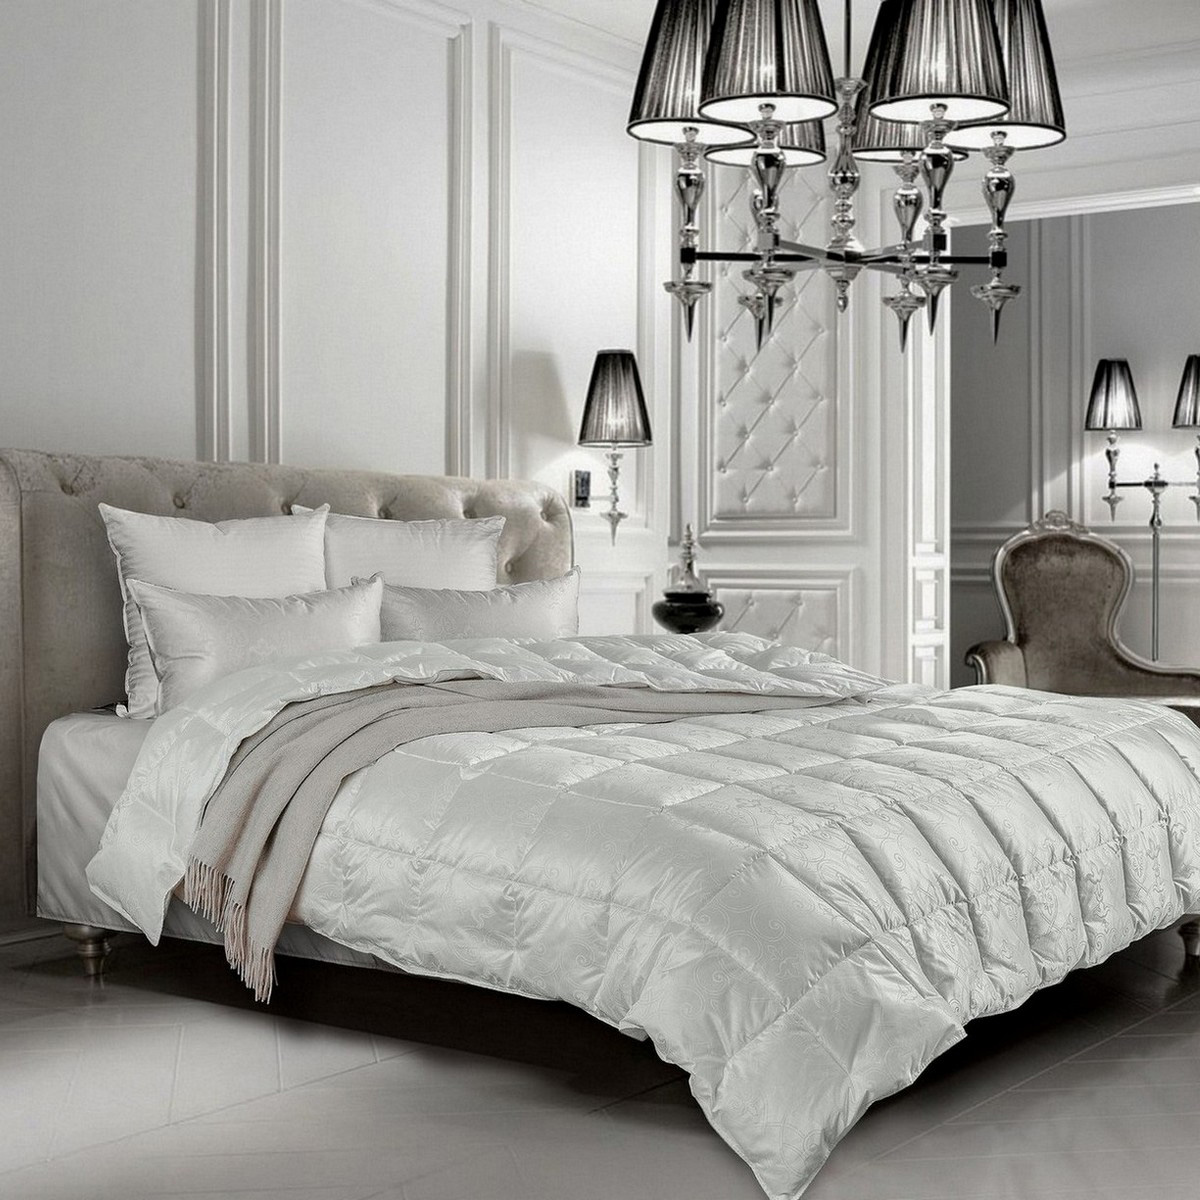 Одеяло Tiara цвет: белый (140х205 см), размер 140х205 см